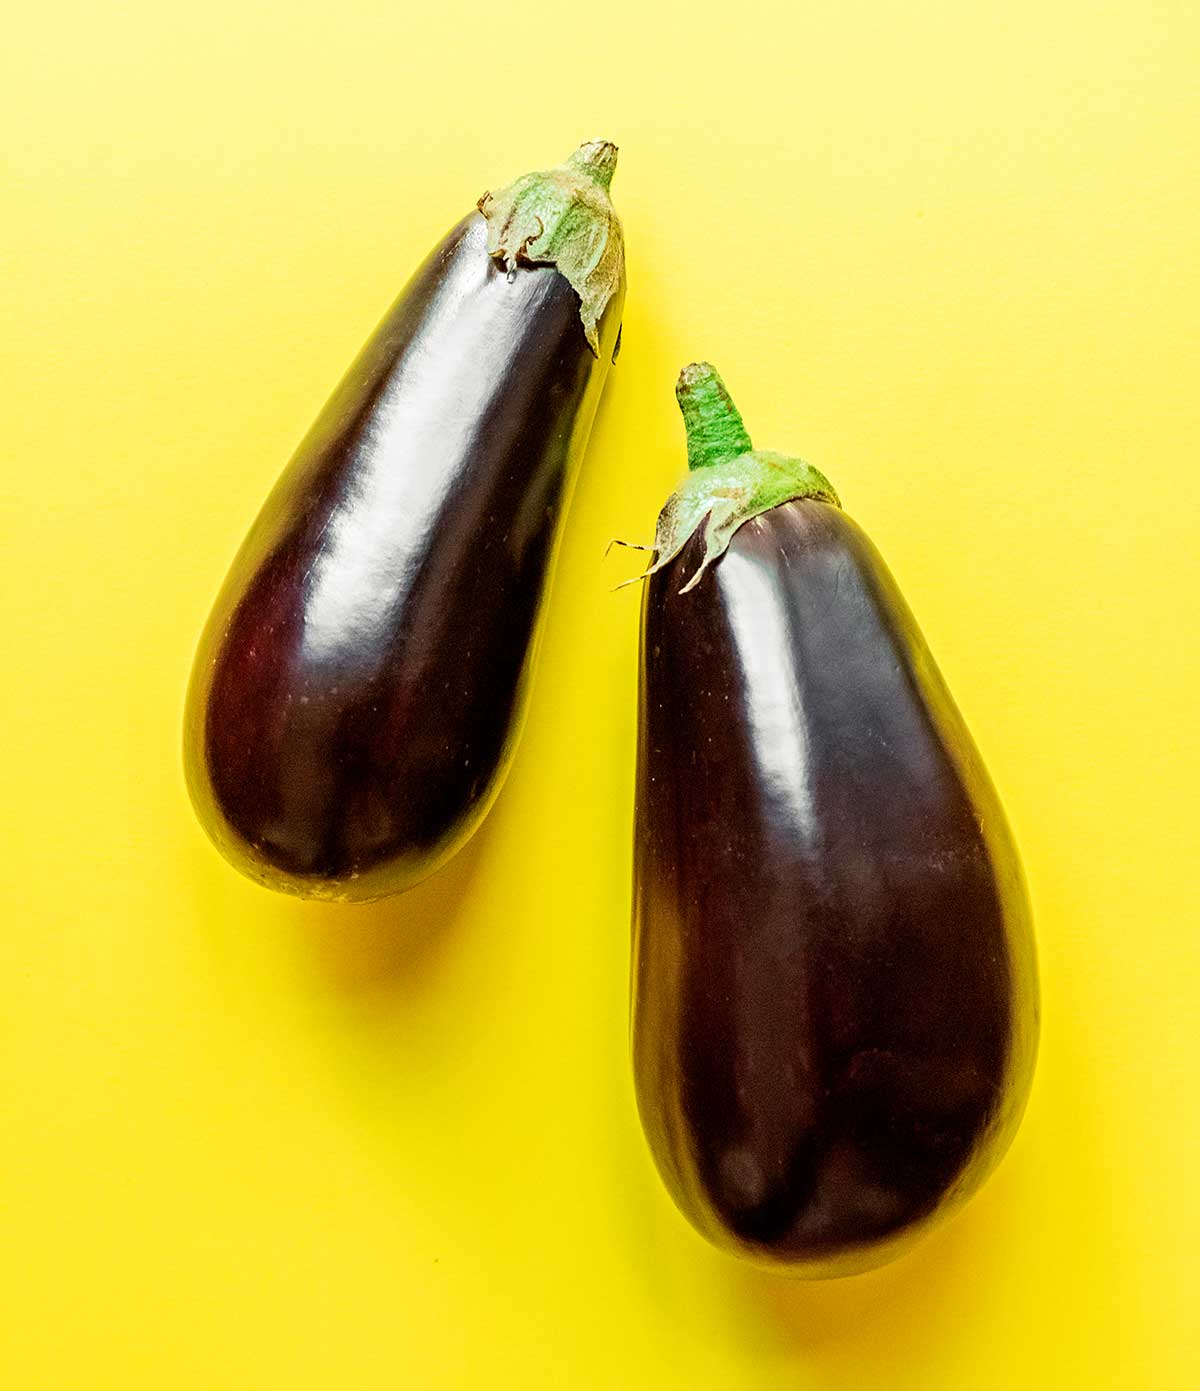 Two Italian eggplants arranged on a yellow background